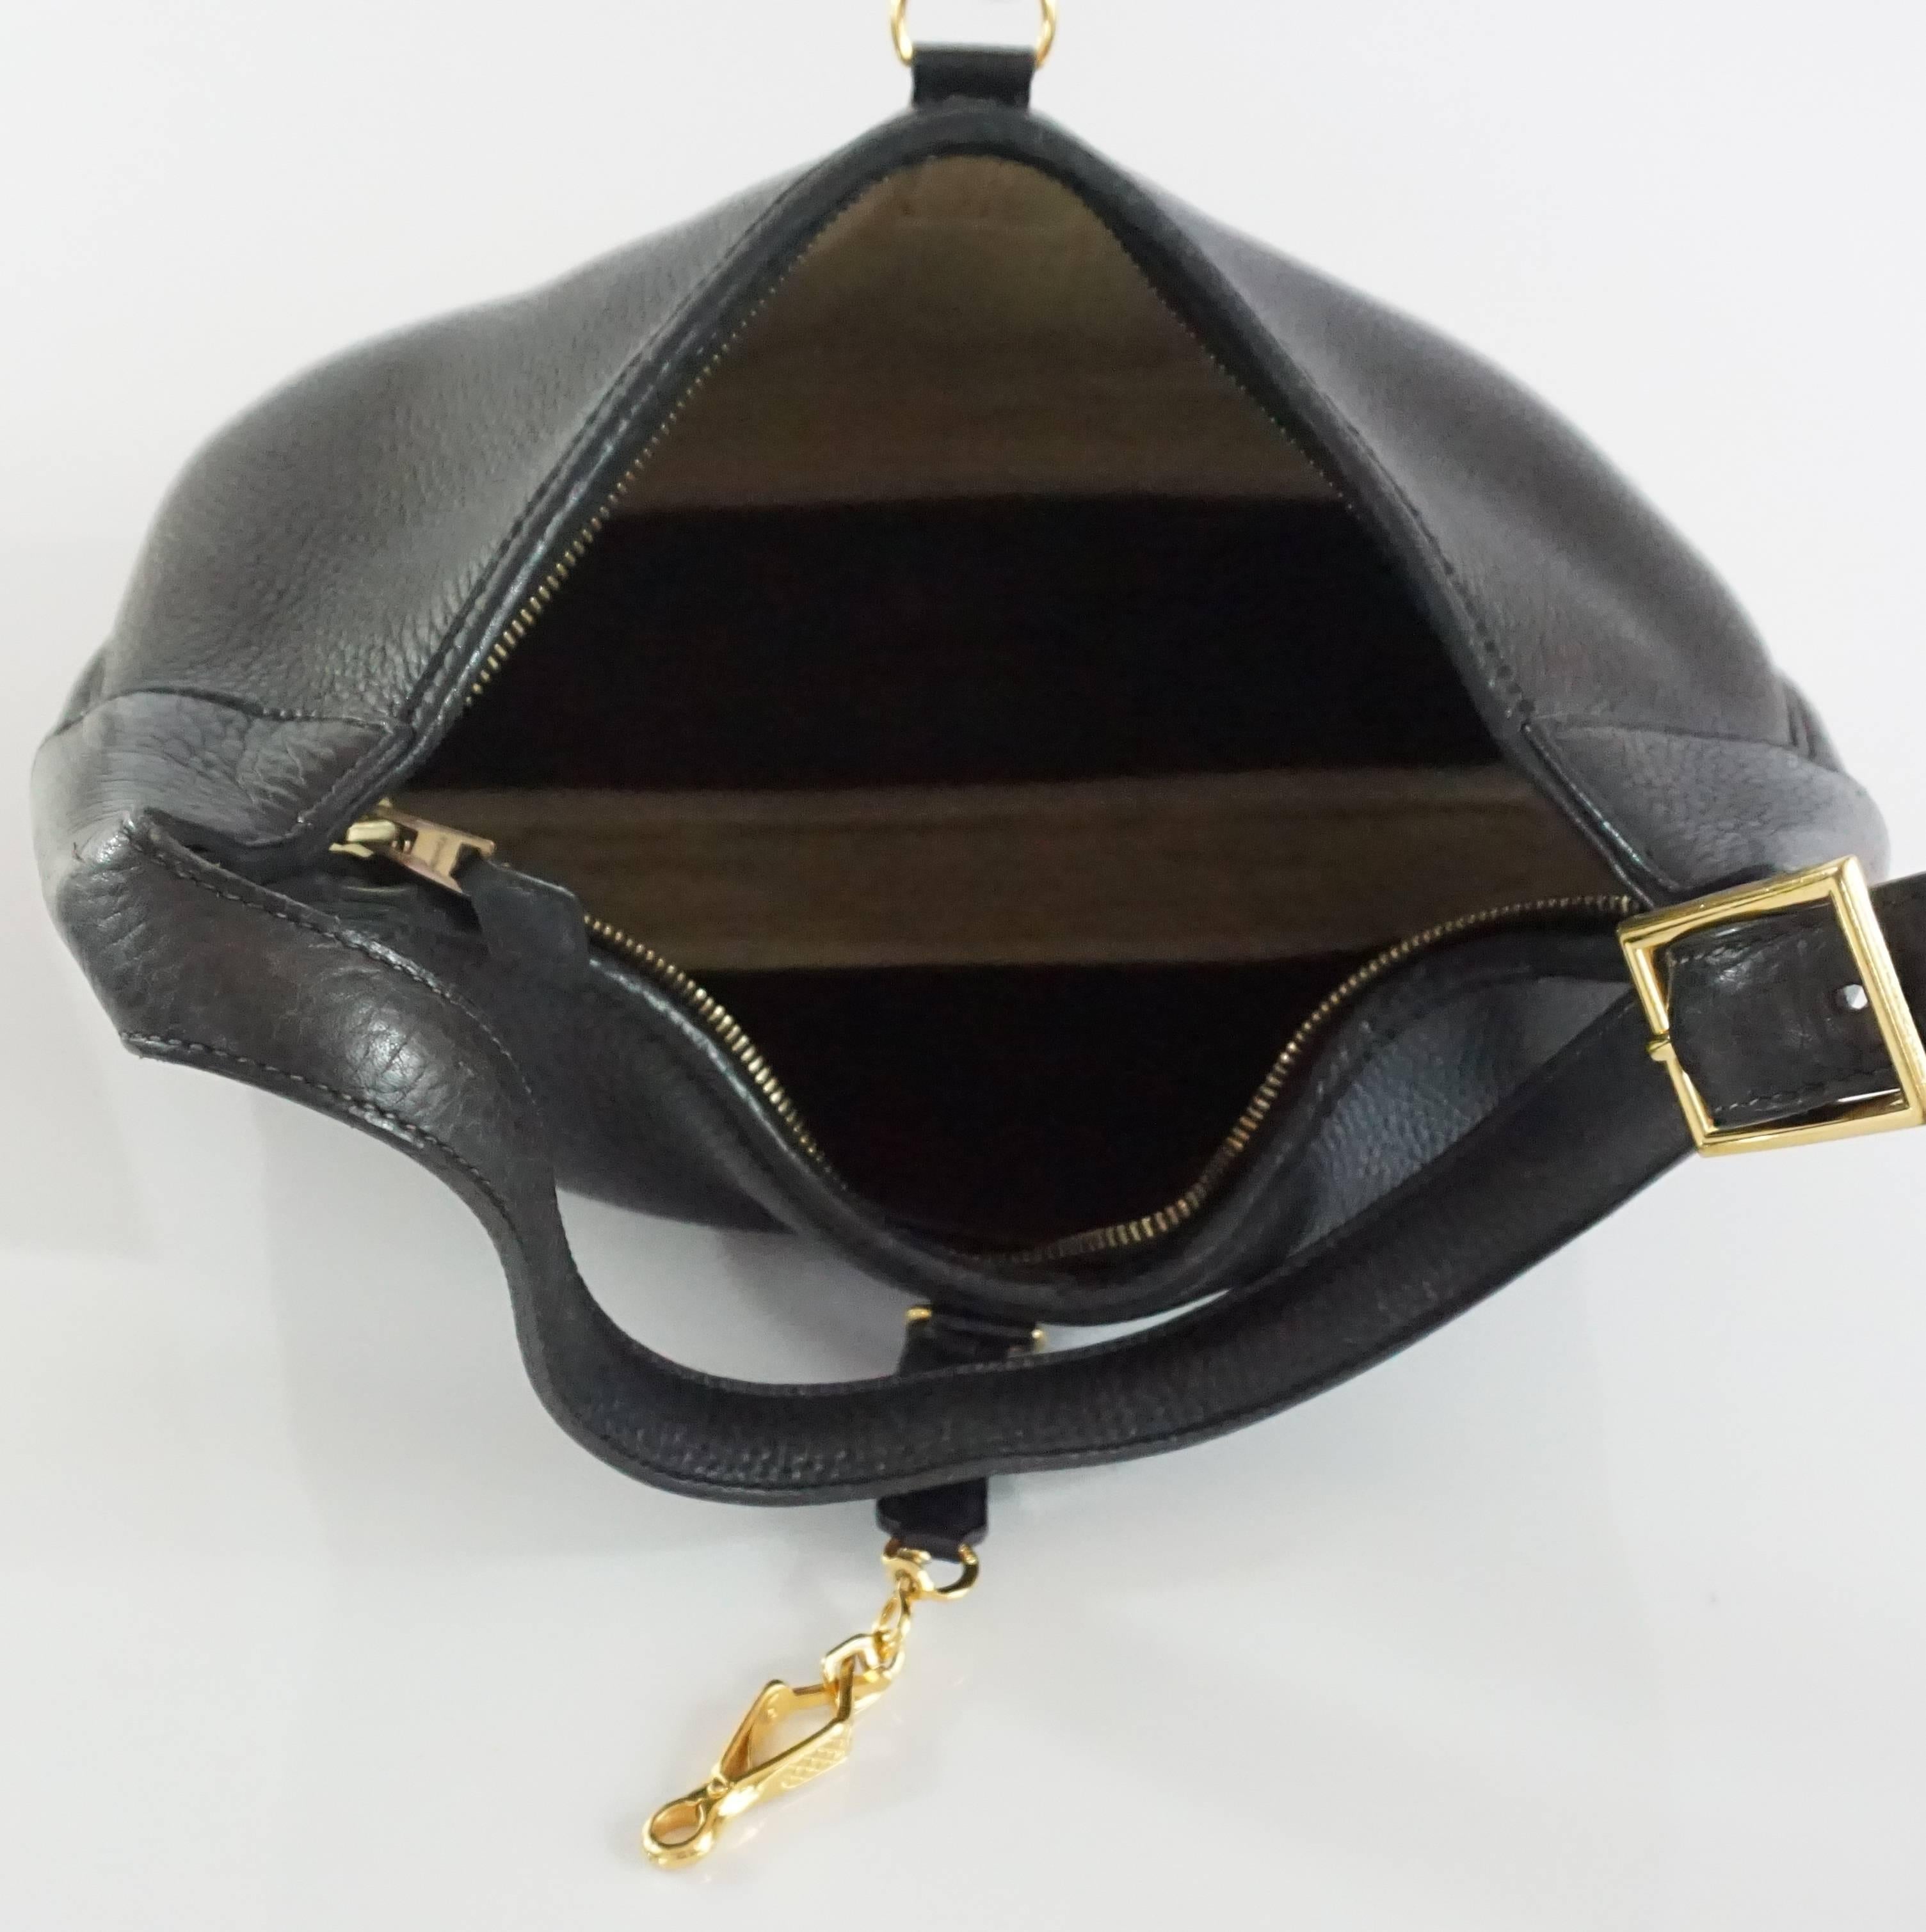 Women's Hermes Black 35cm Togo Leather Trim Handbag - GHW - circa 2004